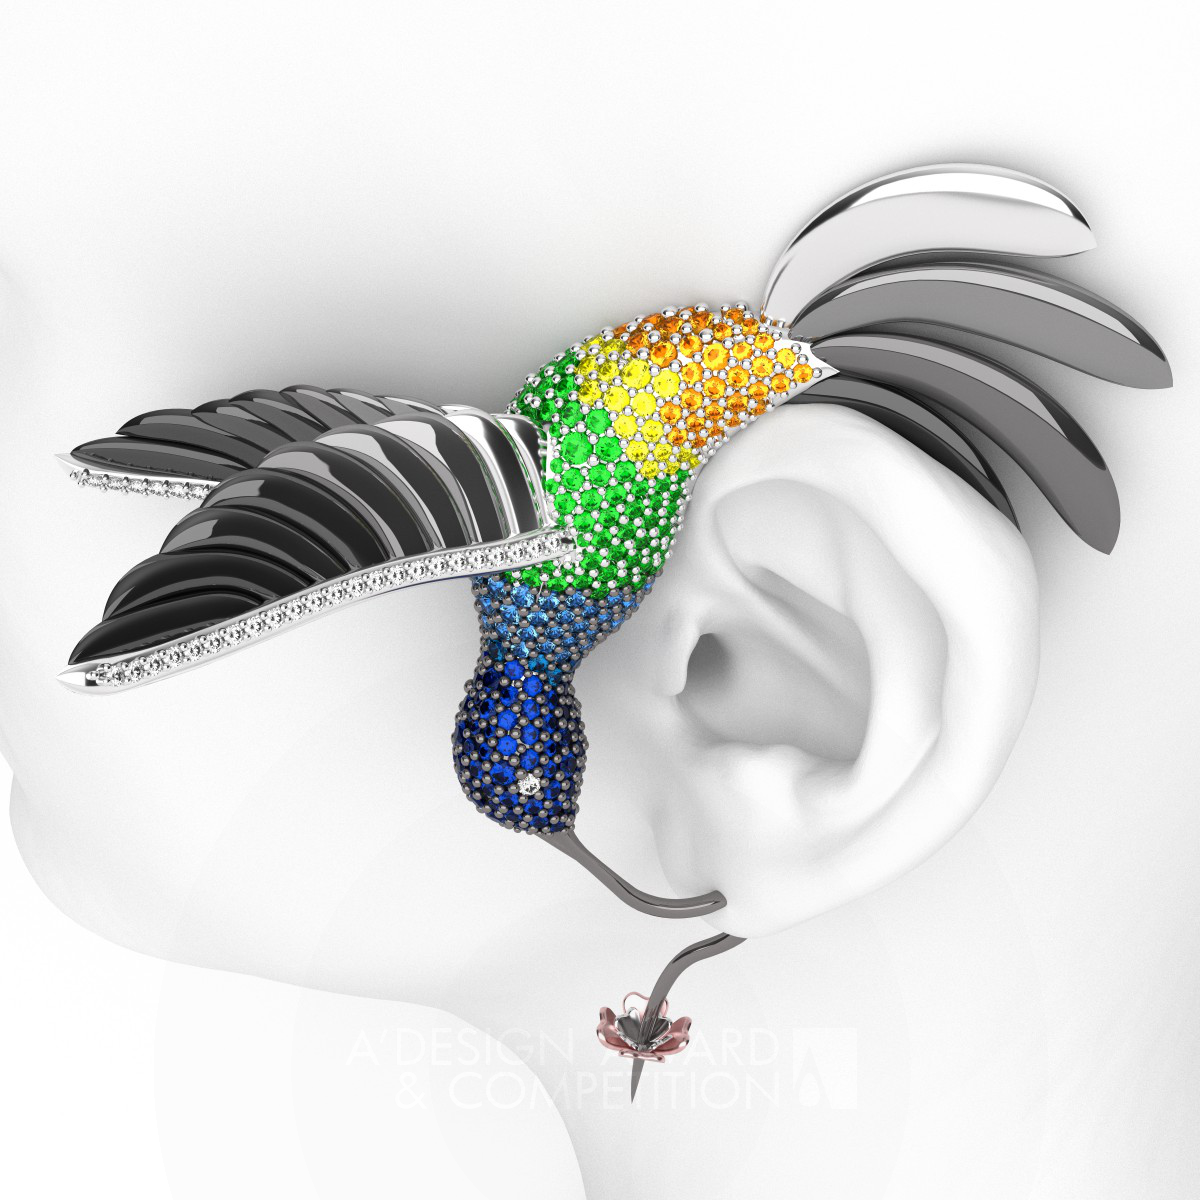 Eleonora Federici wins Iron at the prestigious A' Jewelry Design Award with The Hummingbird Single Earring.